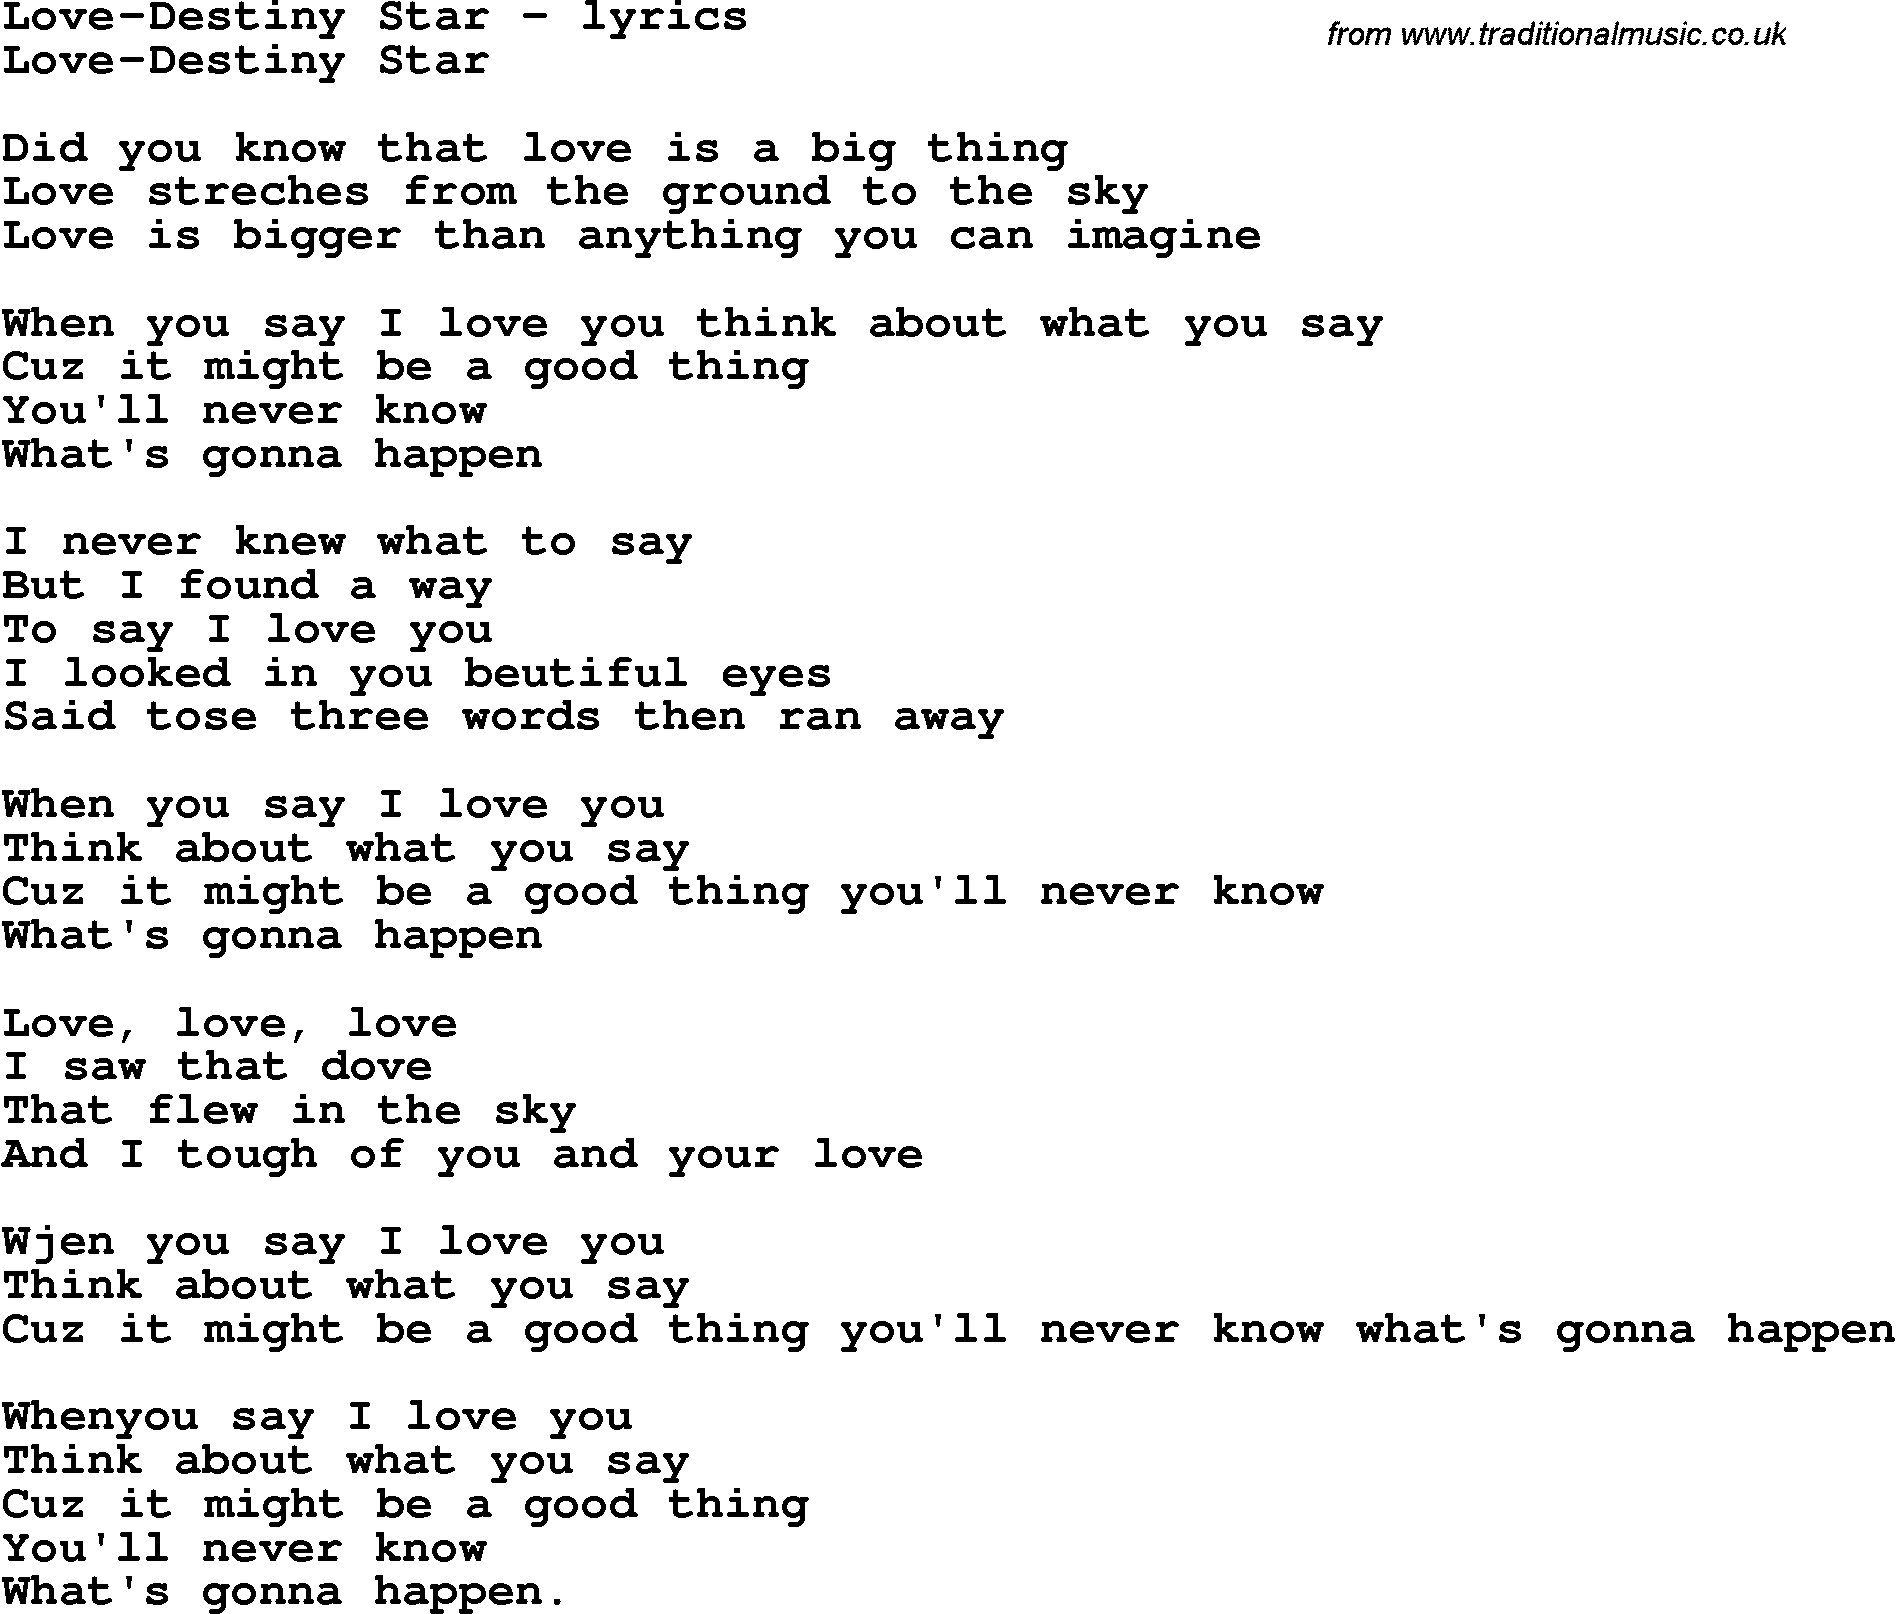 Love Song Lyrics for: Love-Destiny Star